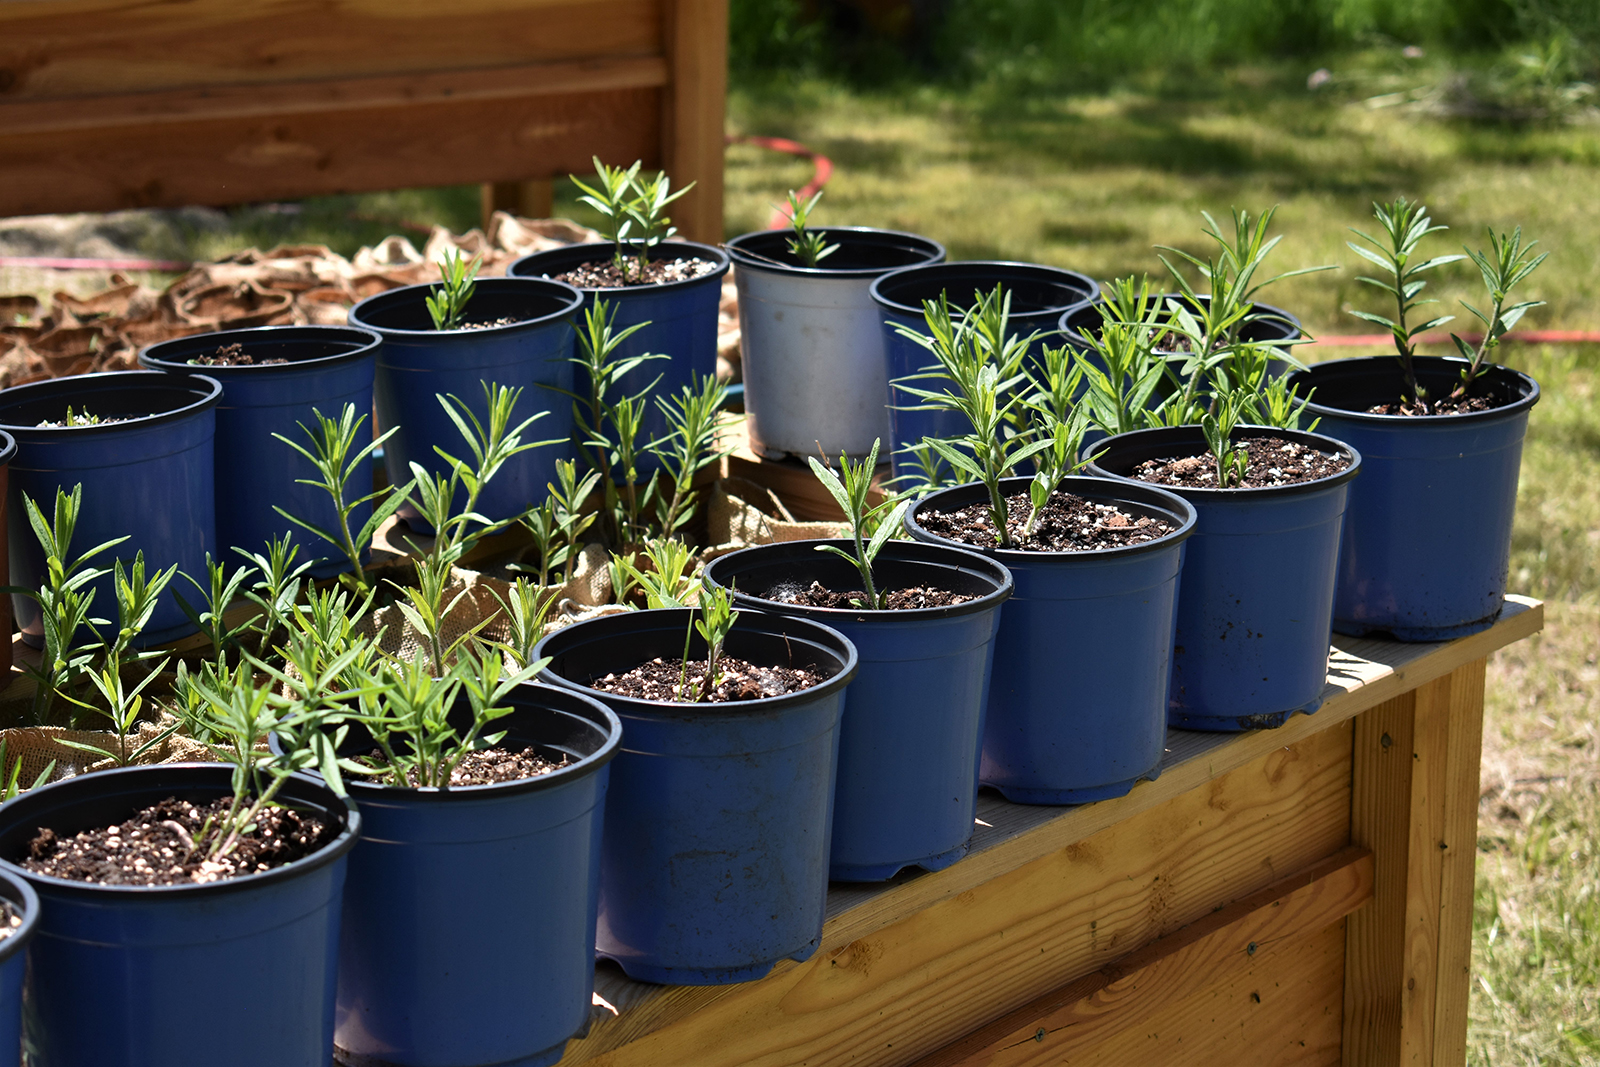 Pots of milkweed